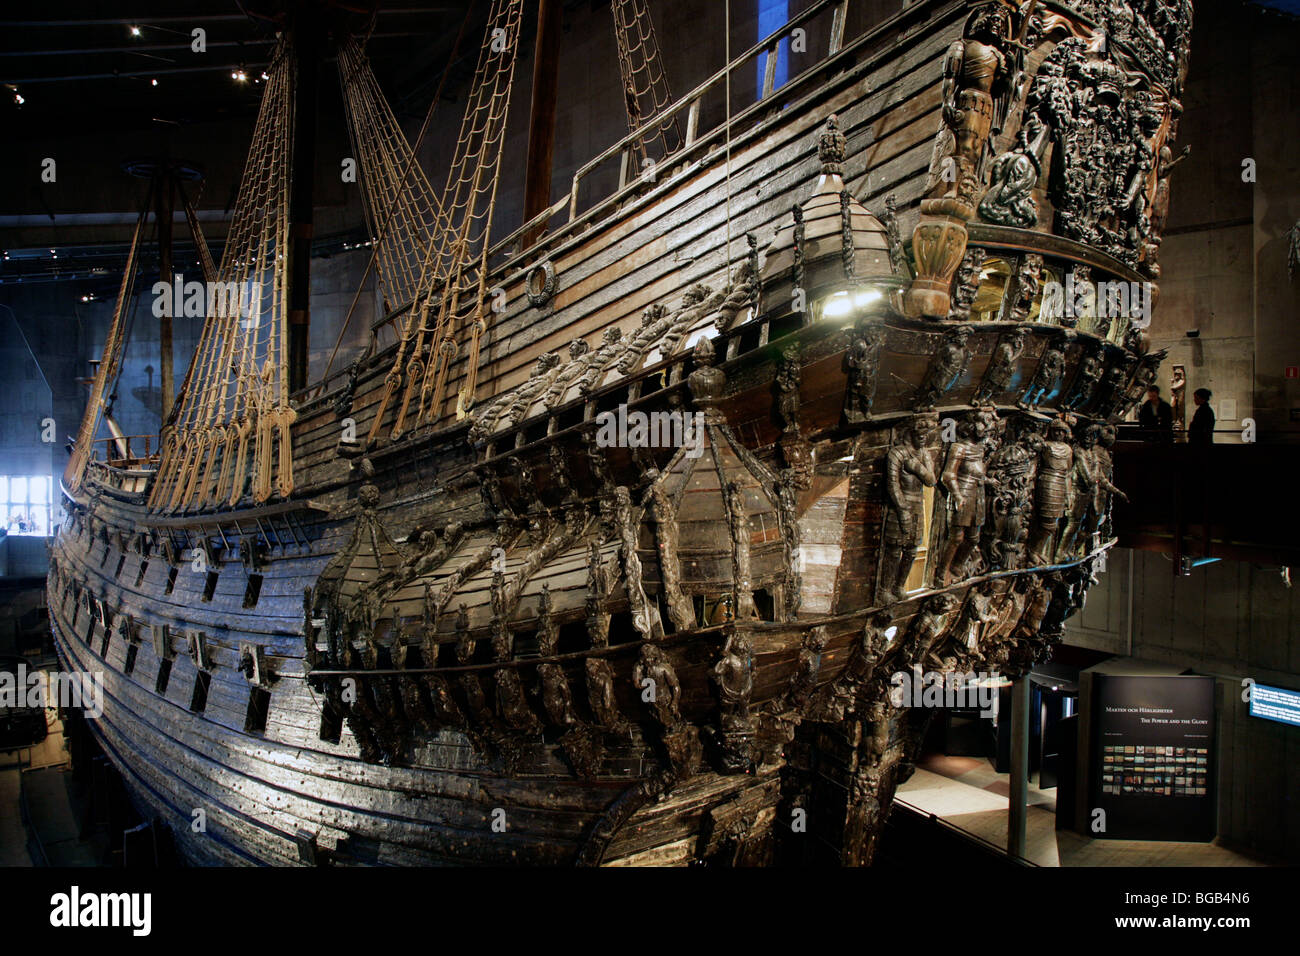 Warship Vasa sunk on maiden voyage in 1628, restored Vasa Museum ...